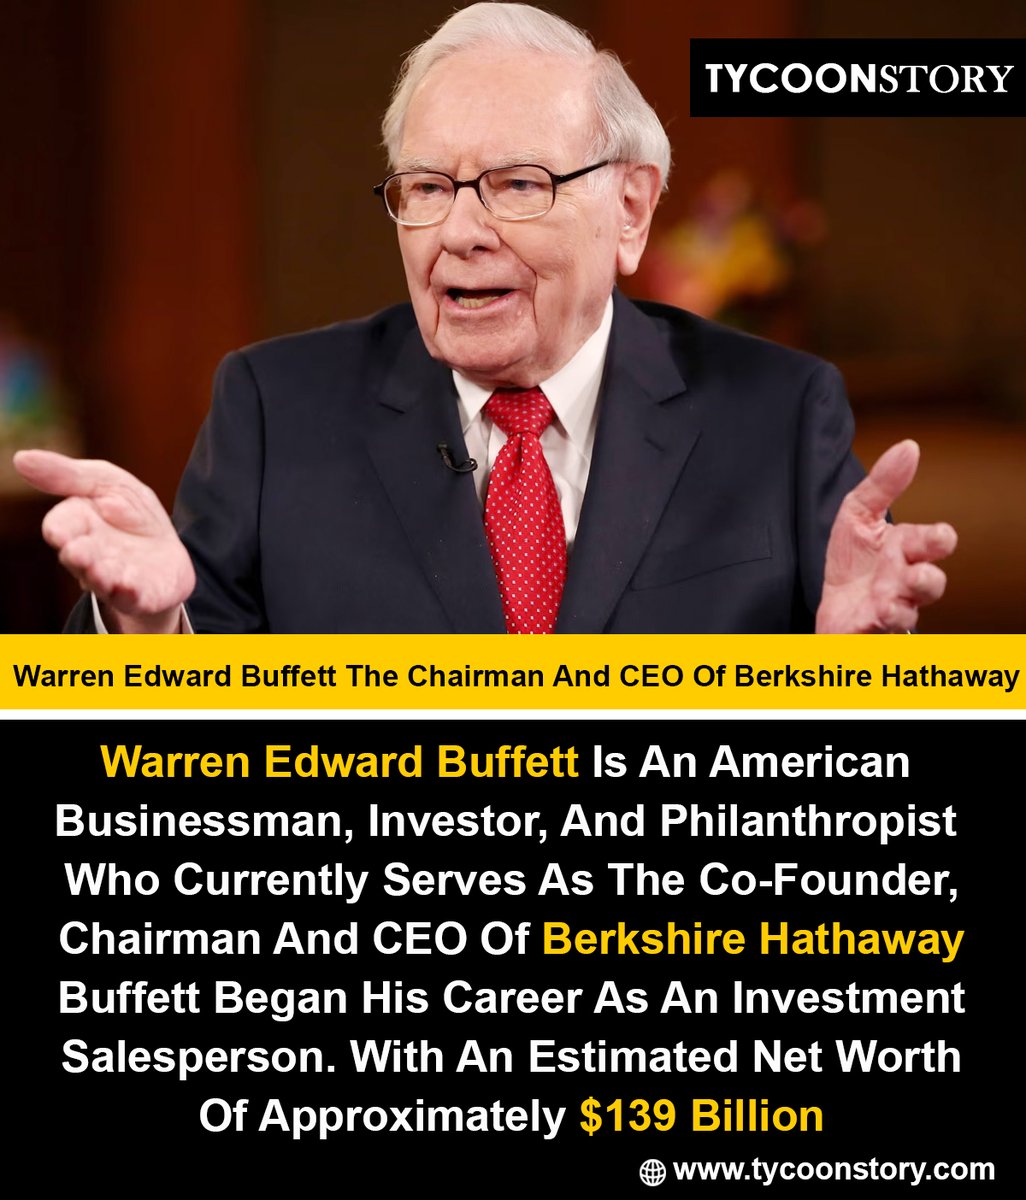 Warren Edward Buffett The Chairman And CEO Of Berkshire Hathaway 
#warrenbuffett #berkshirehathaway #investinglegend #OracleOfOmaha #valueinvesting #FinancialWisdom #stockmarket #investmentstrategy
@WarrenBuffett @BerkshireHathEC
tycoonstory.com